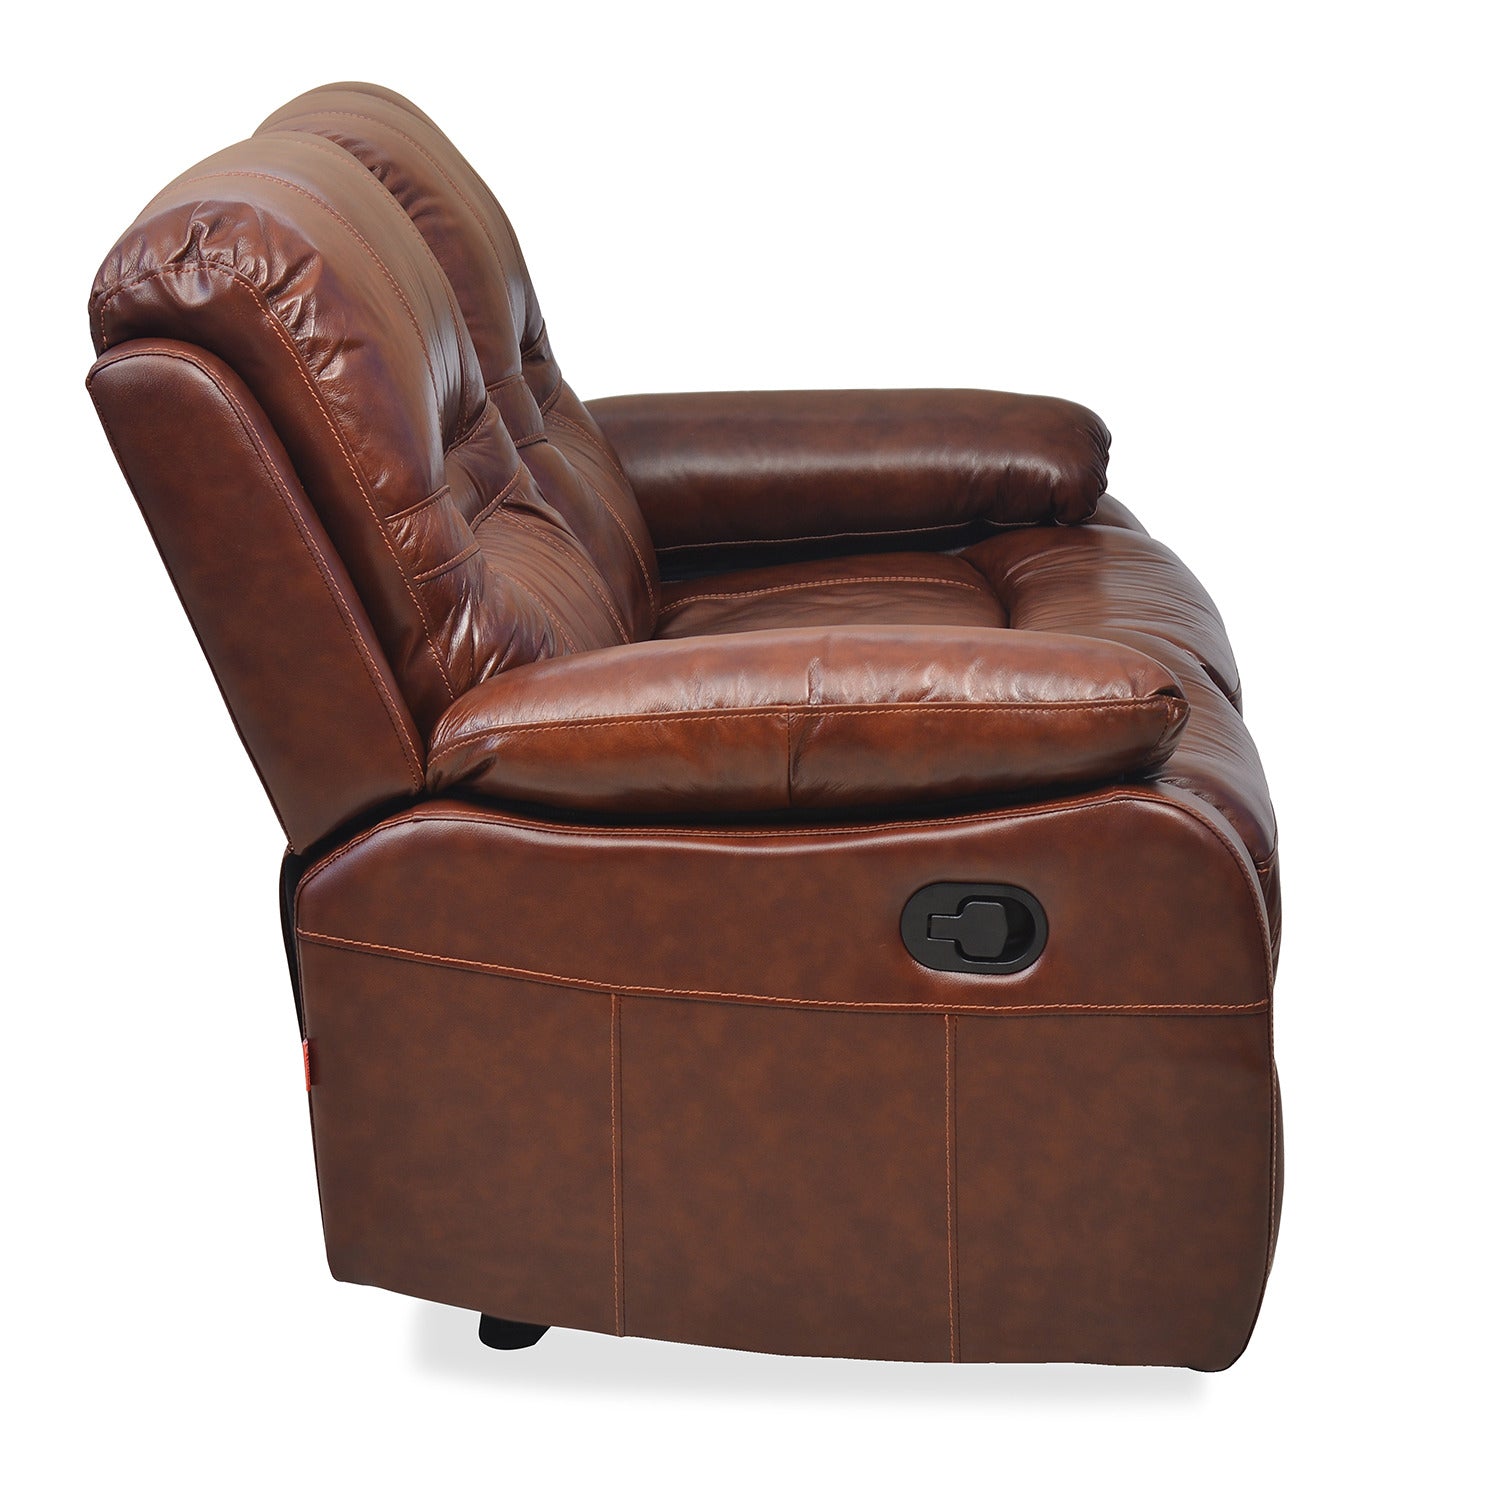 Wilson 2 Seater Sofa with Manual Recliner (Caramel)